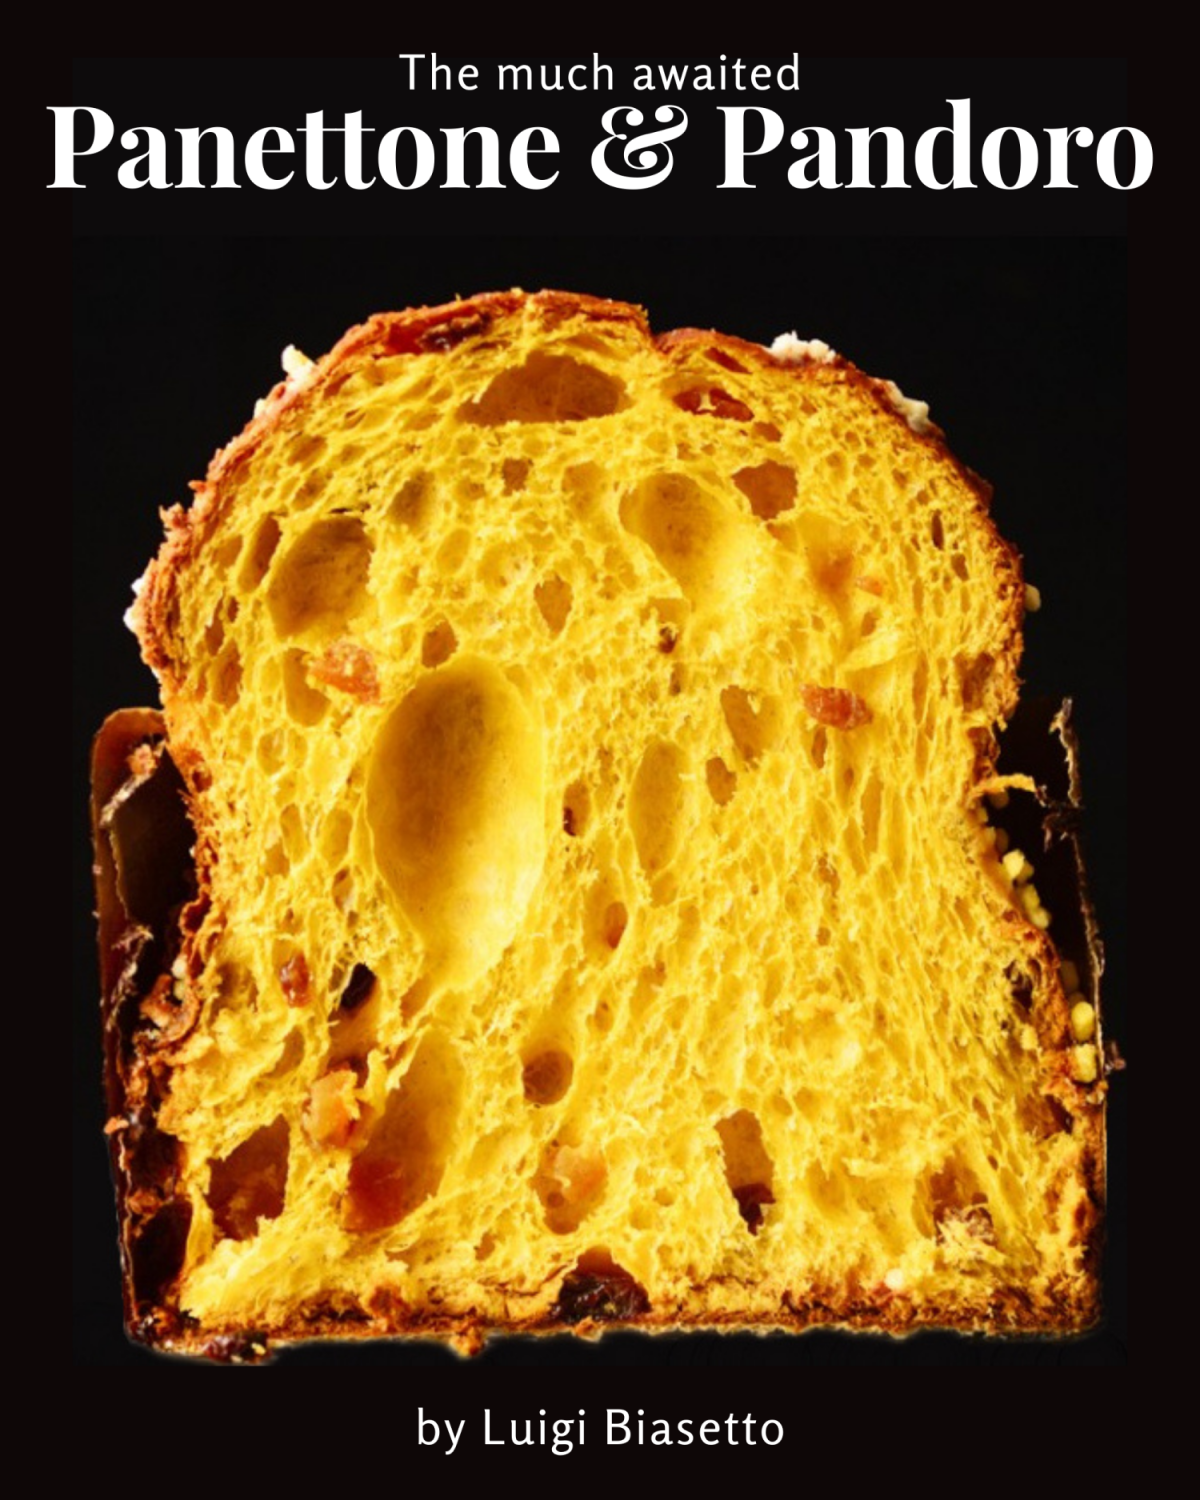 Panettone Biasetto iTALIAN HOLIDAY FOOD